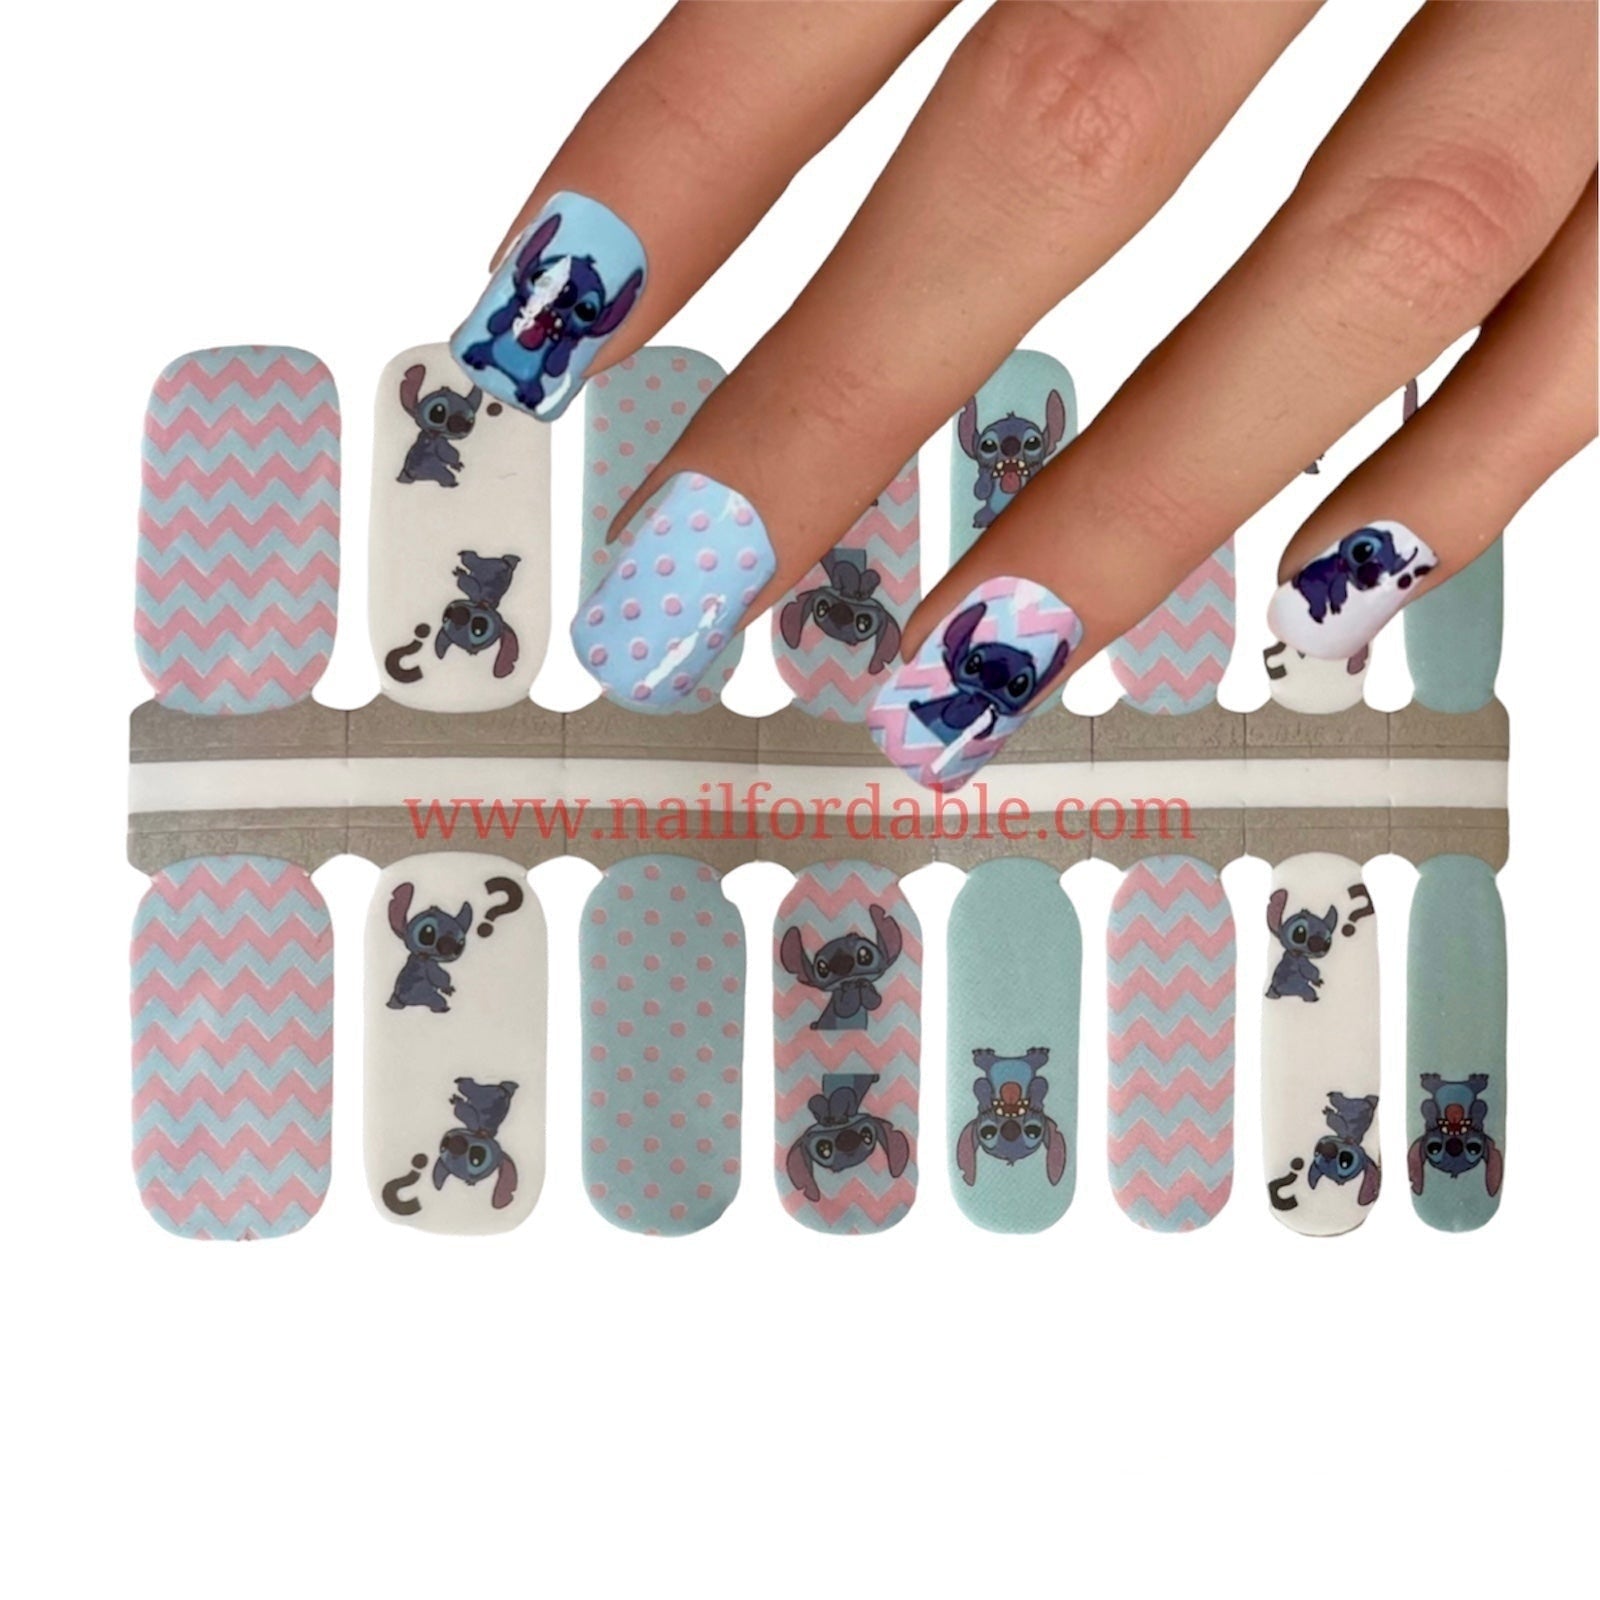 Stitch Fix Lilo and Stitch Nail Polish Strips / Nail Wraps / Nail Stickers